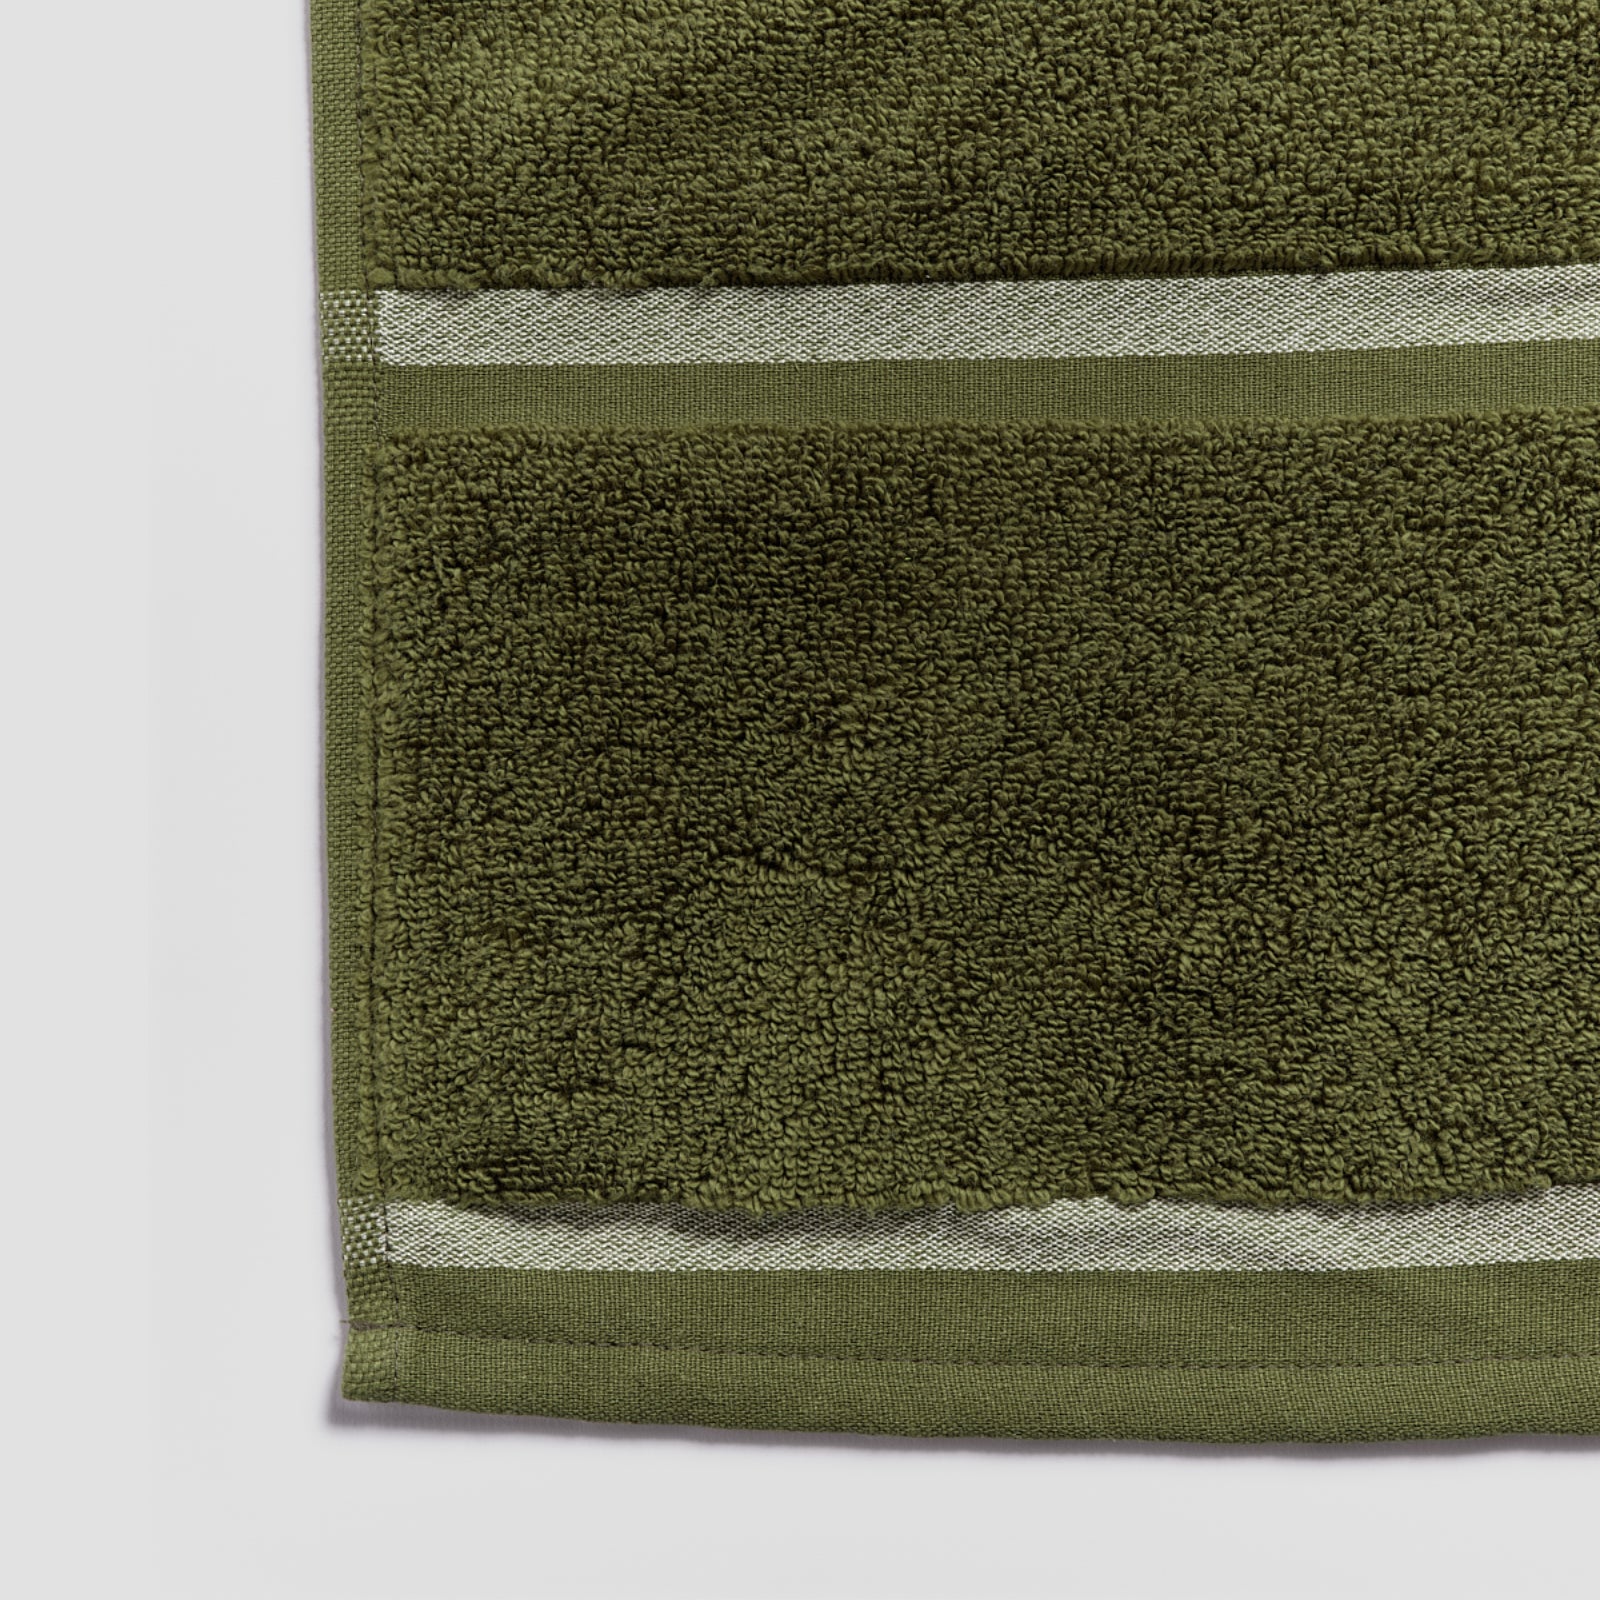 Botanic Green Cotton Towels